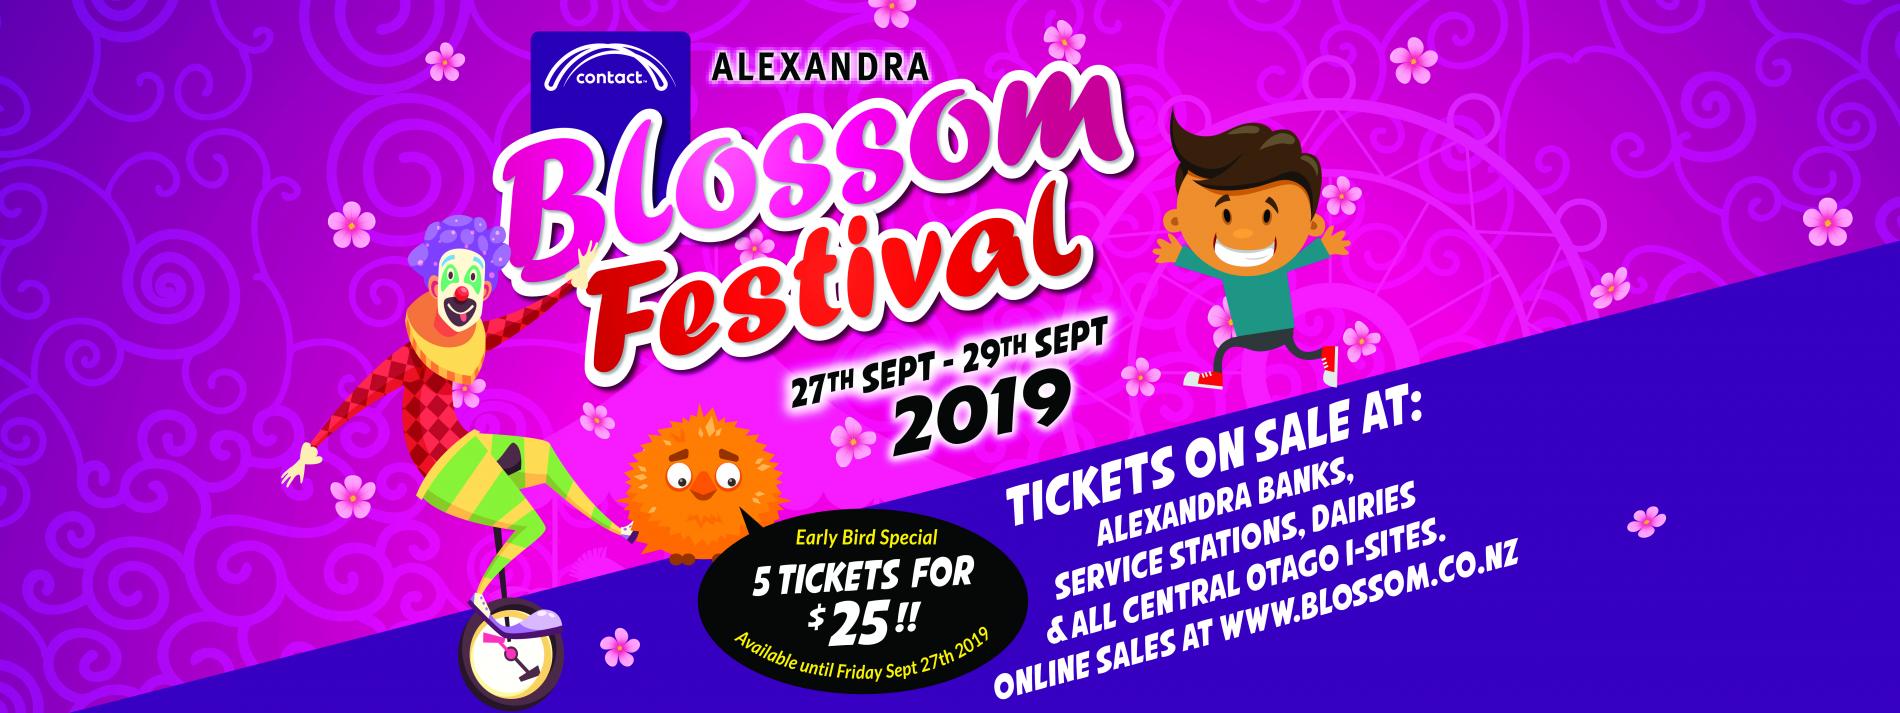 Blossom Tickets 2019 Alexandra Blossom Festival